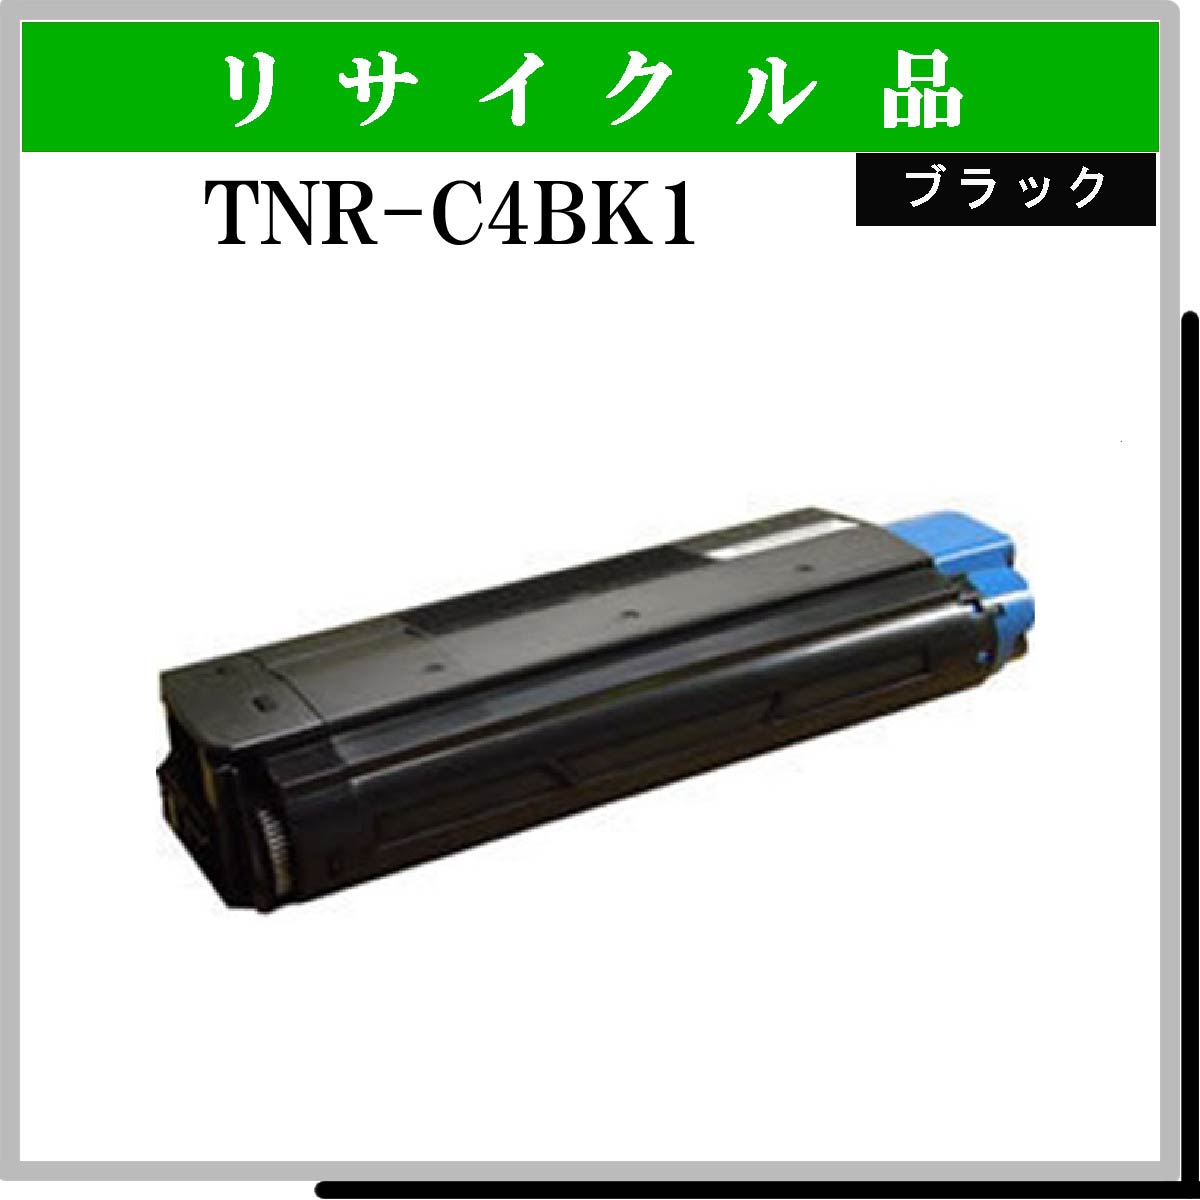 TNR-C4BK1